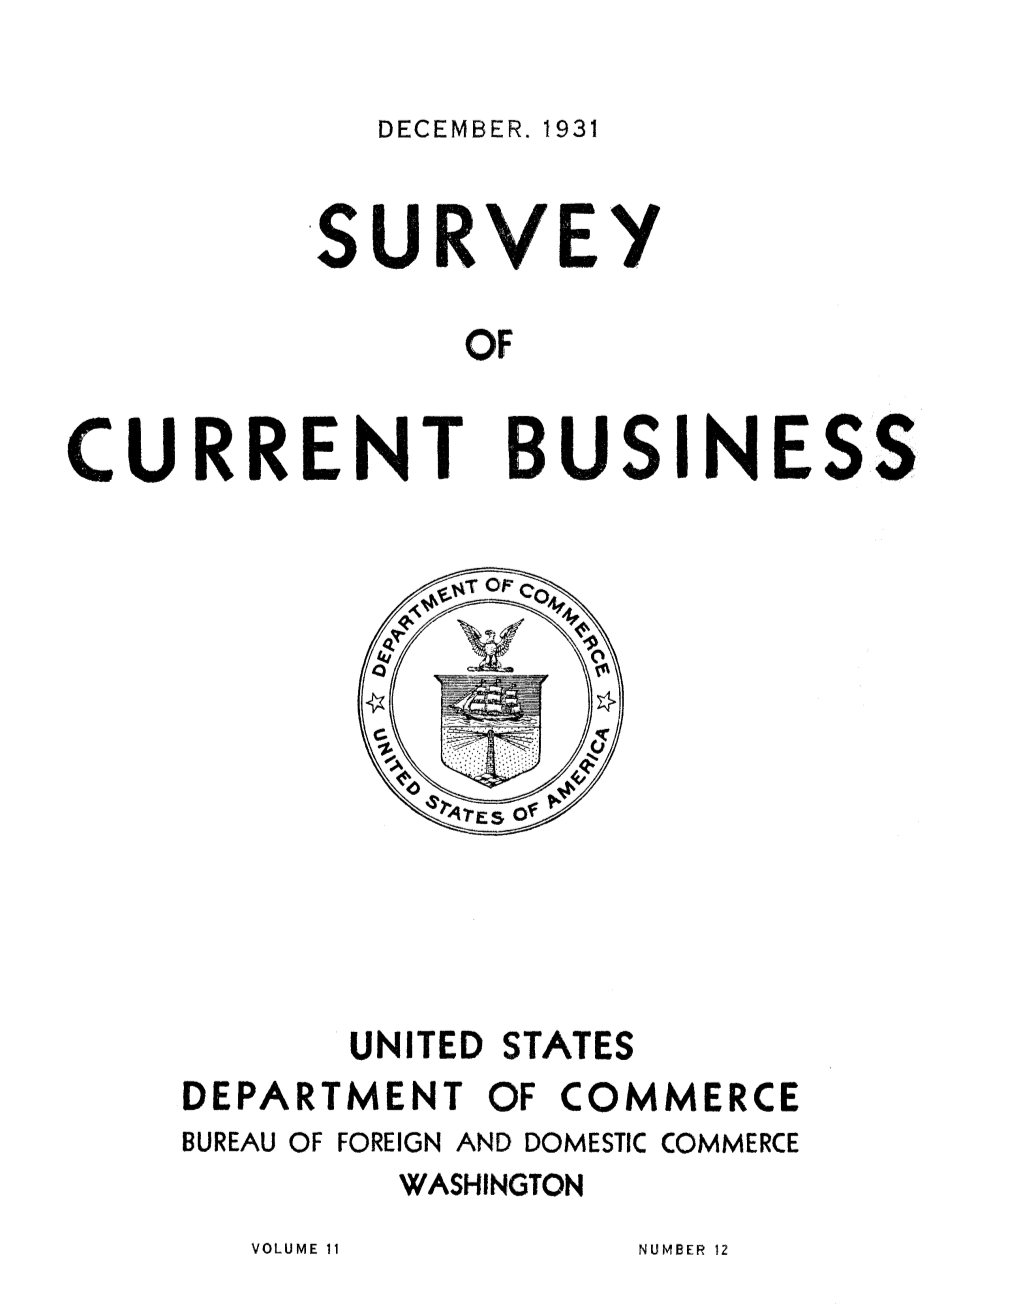 Survey of Current Business December 1931